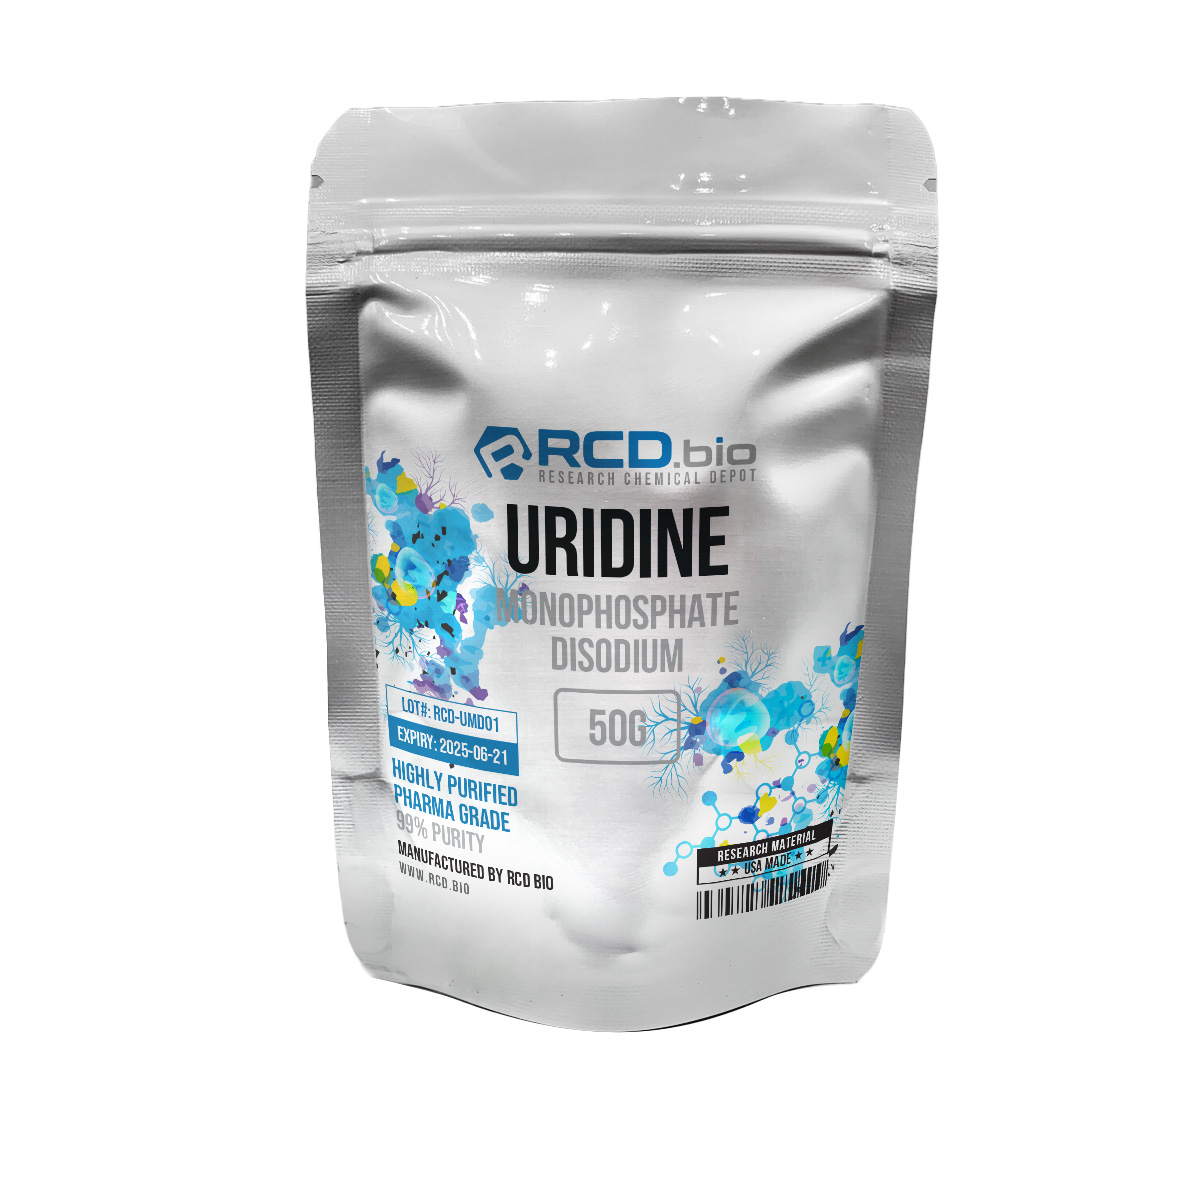 Uridine-50g-70x70_NU